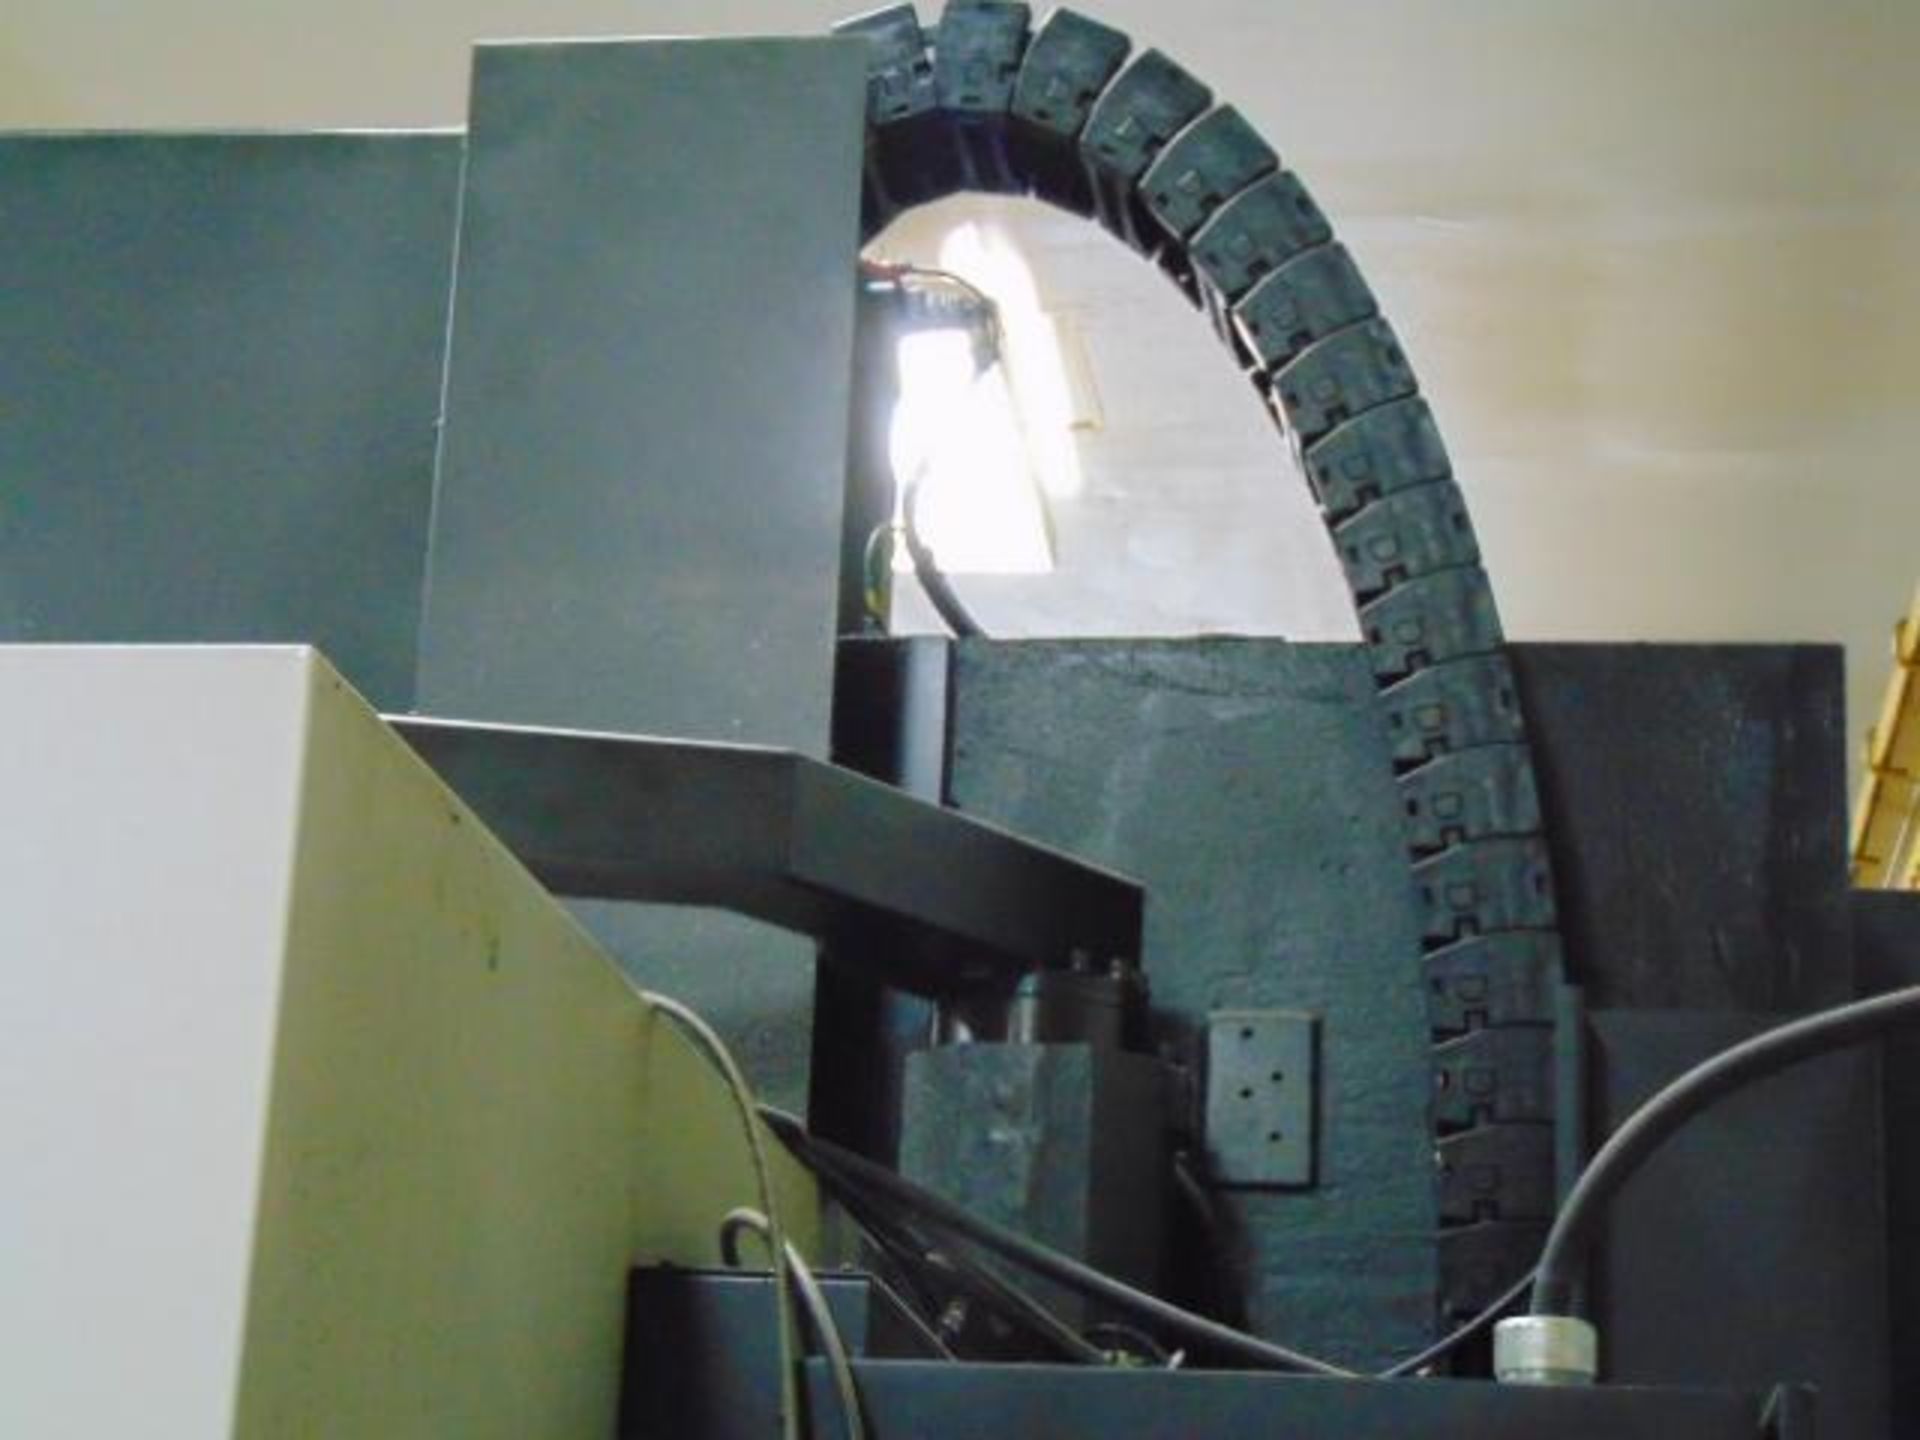 4-AXIS VERTICAL MACHINING CENTER, DOOSAN MDL. MYNX 7500/50, new 4/2012, Fanuc 31i CNC, 29.5" x 63" t - Image 21 of 21